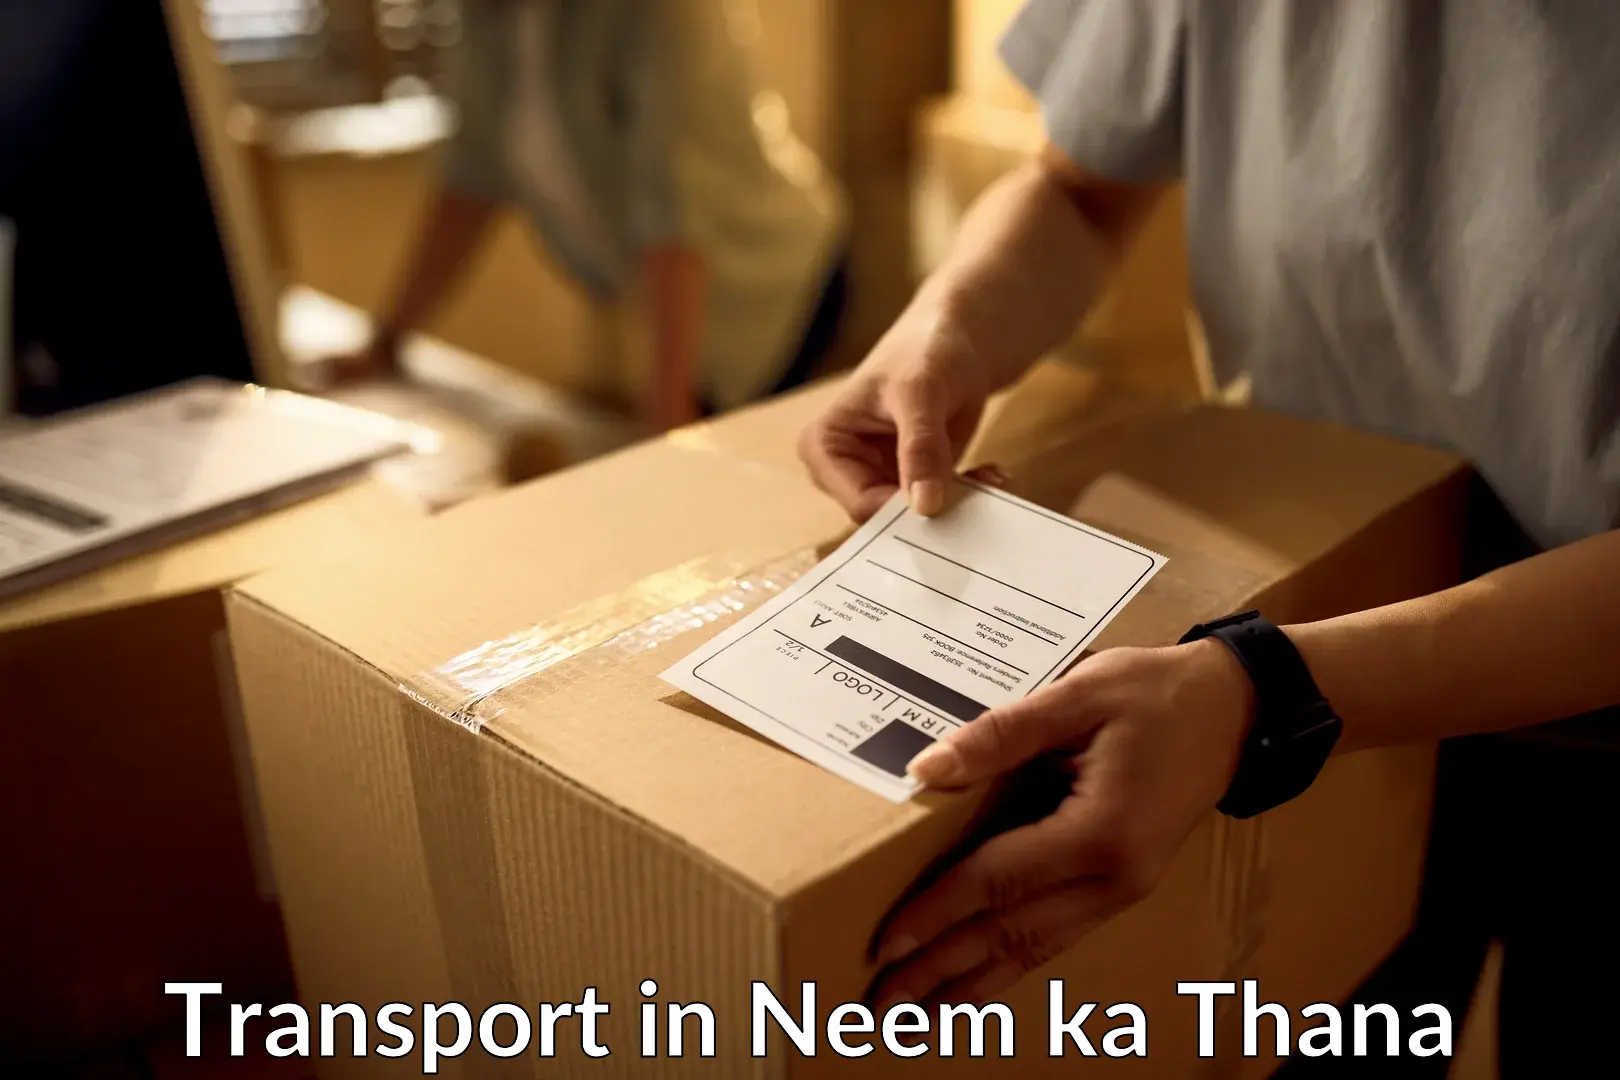 Express transport services in Neem ka Thana